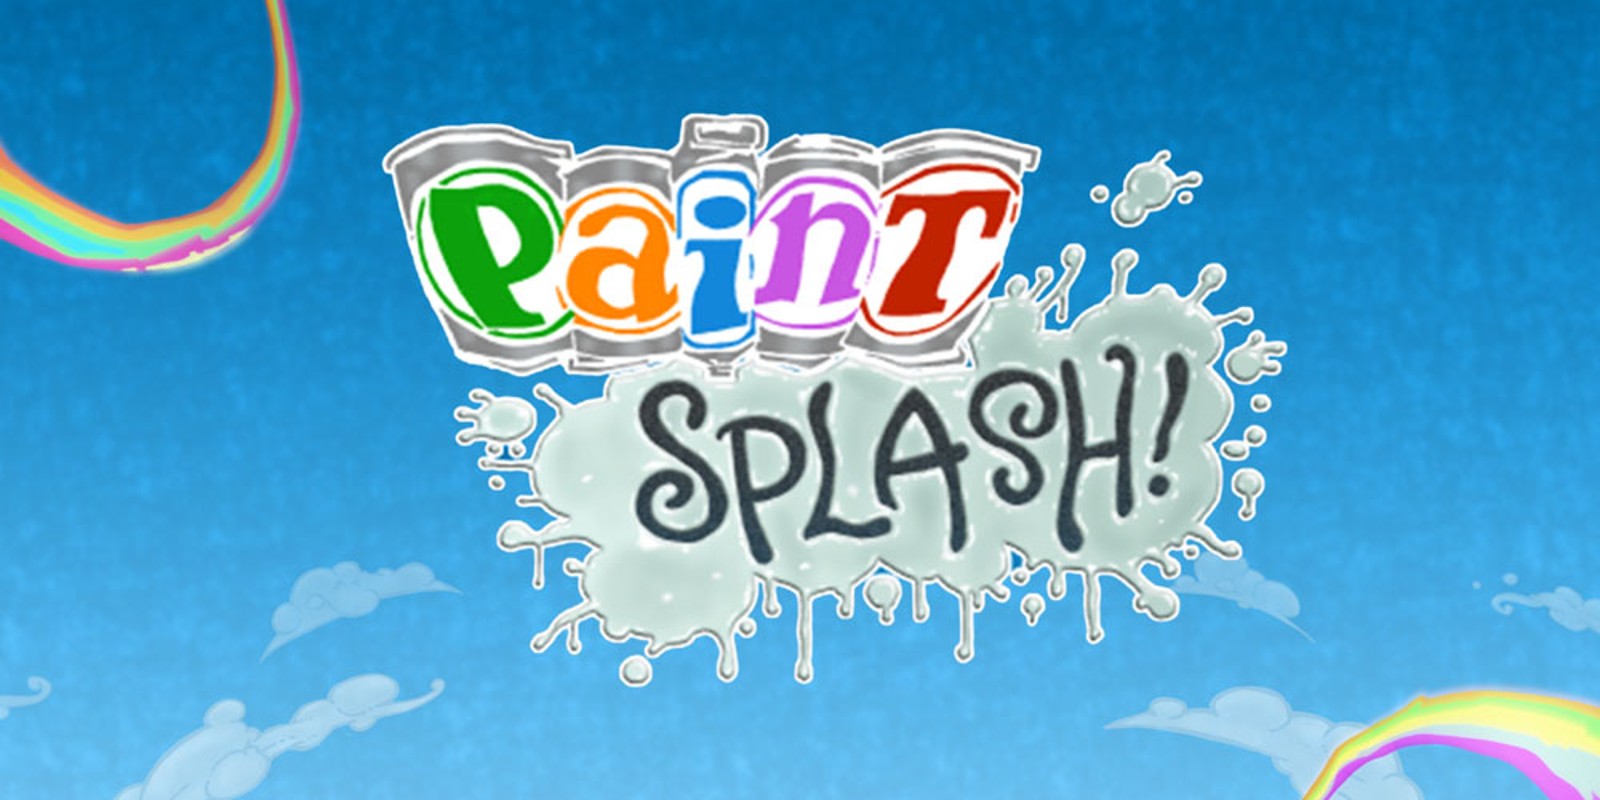 Paint Splash